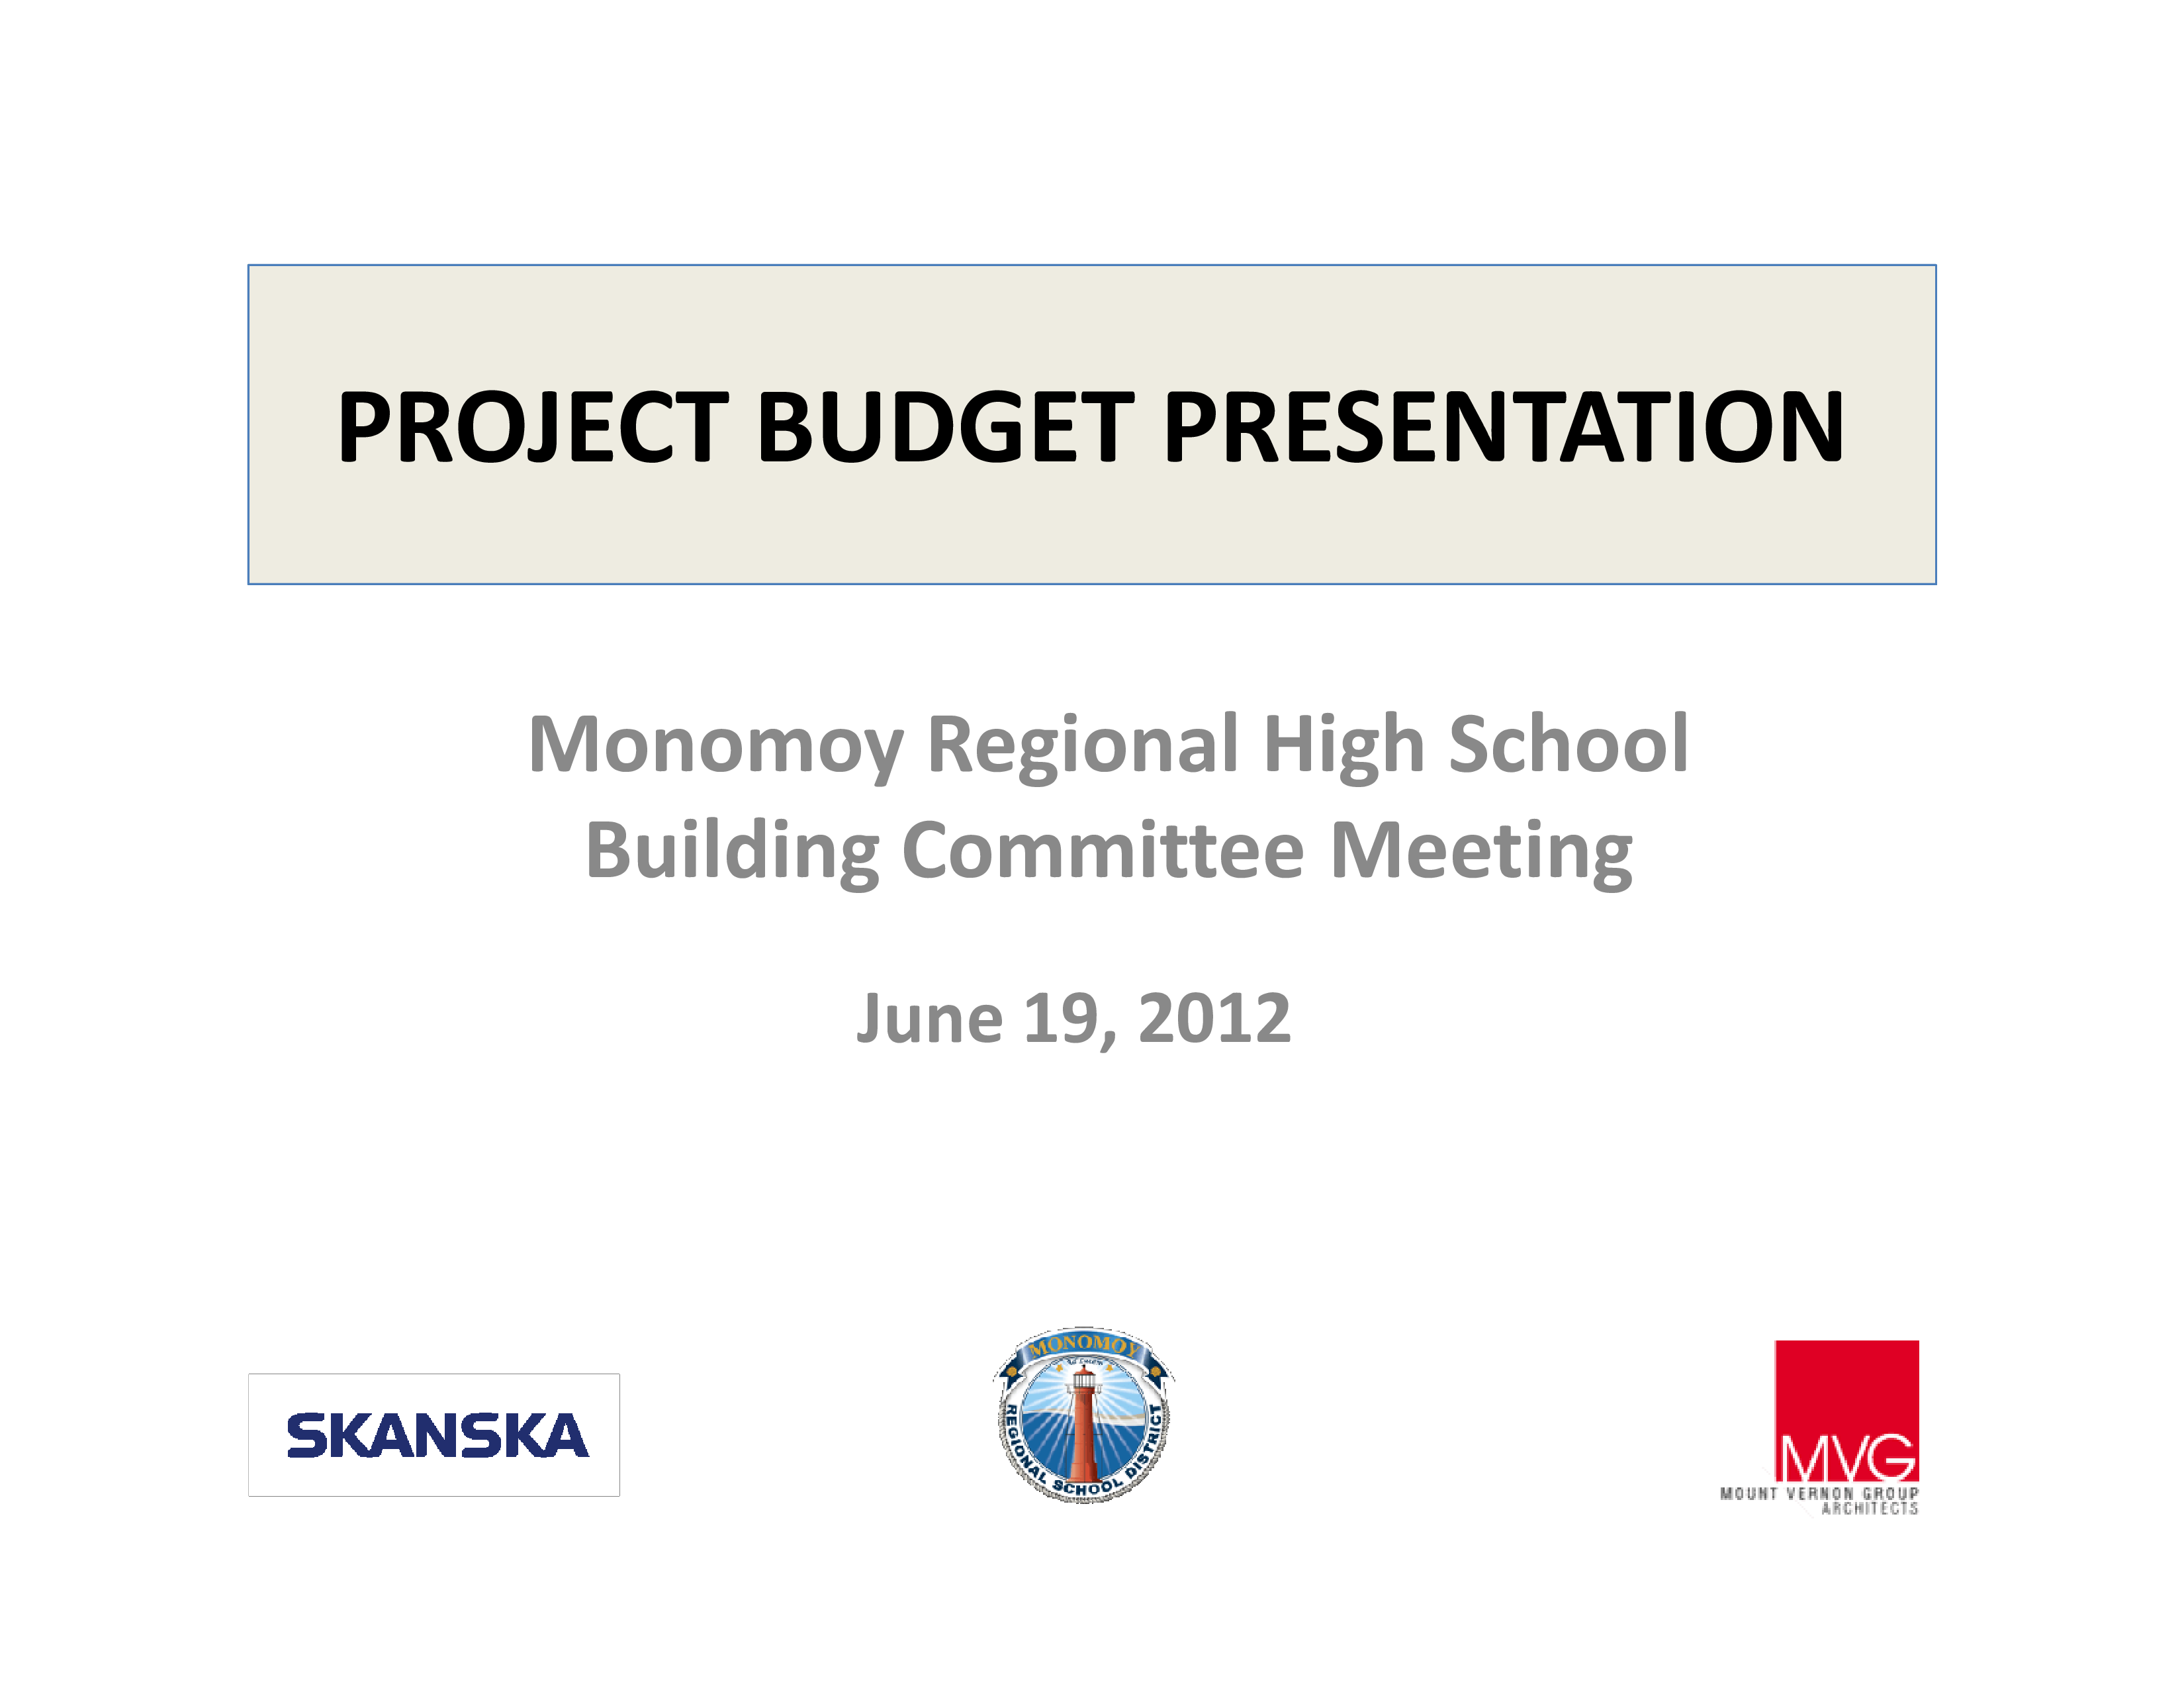 Project Budget Presentation Templates at allbusinesstemplates com